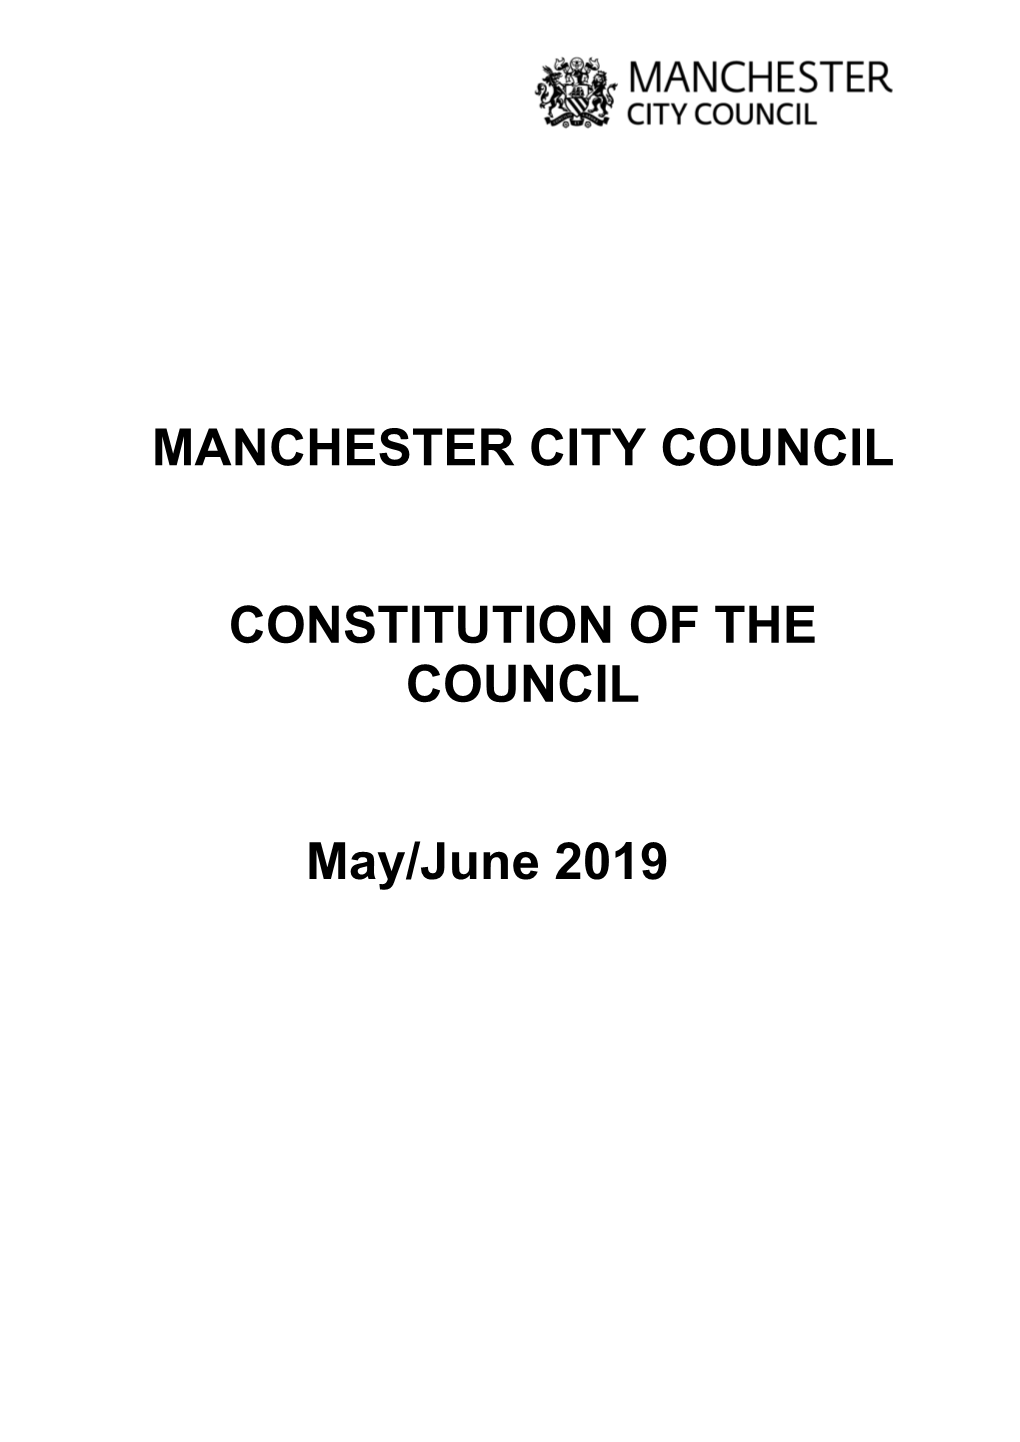 Manchester City Council Constitution June 2019